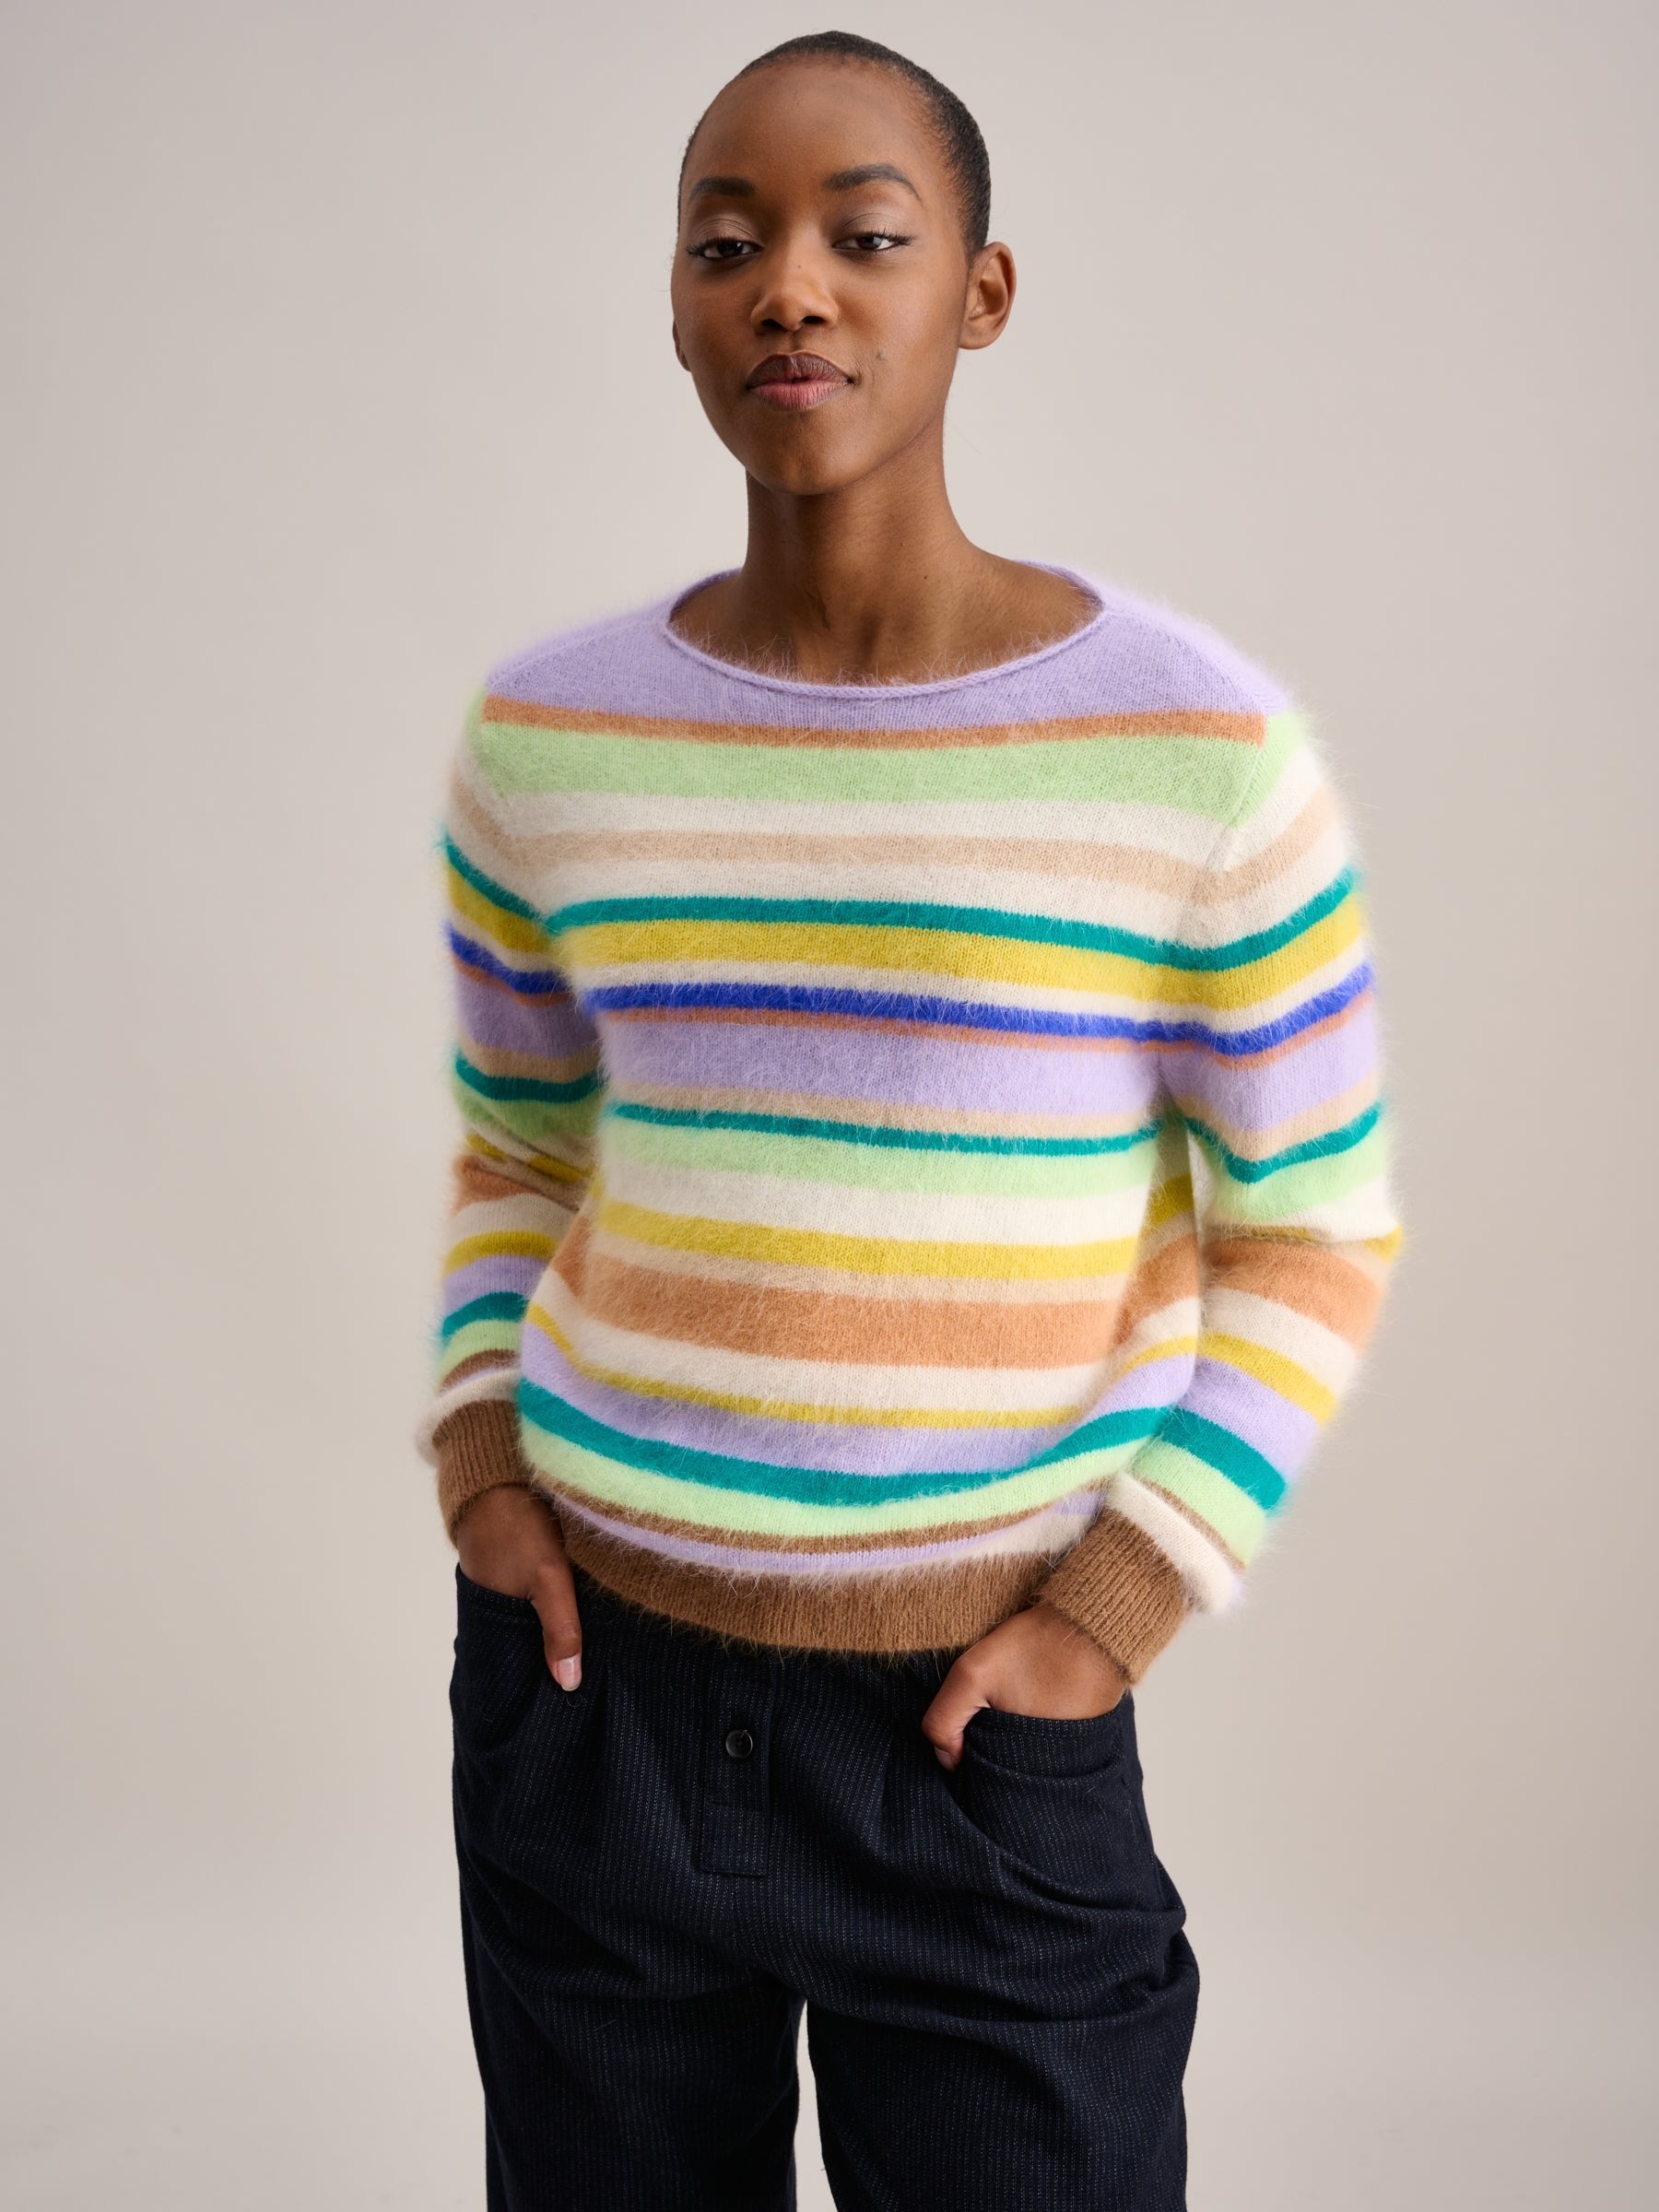 Datris Sweater in Stripe A, from Bellerose – Clic